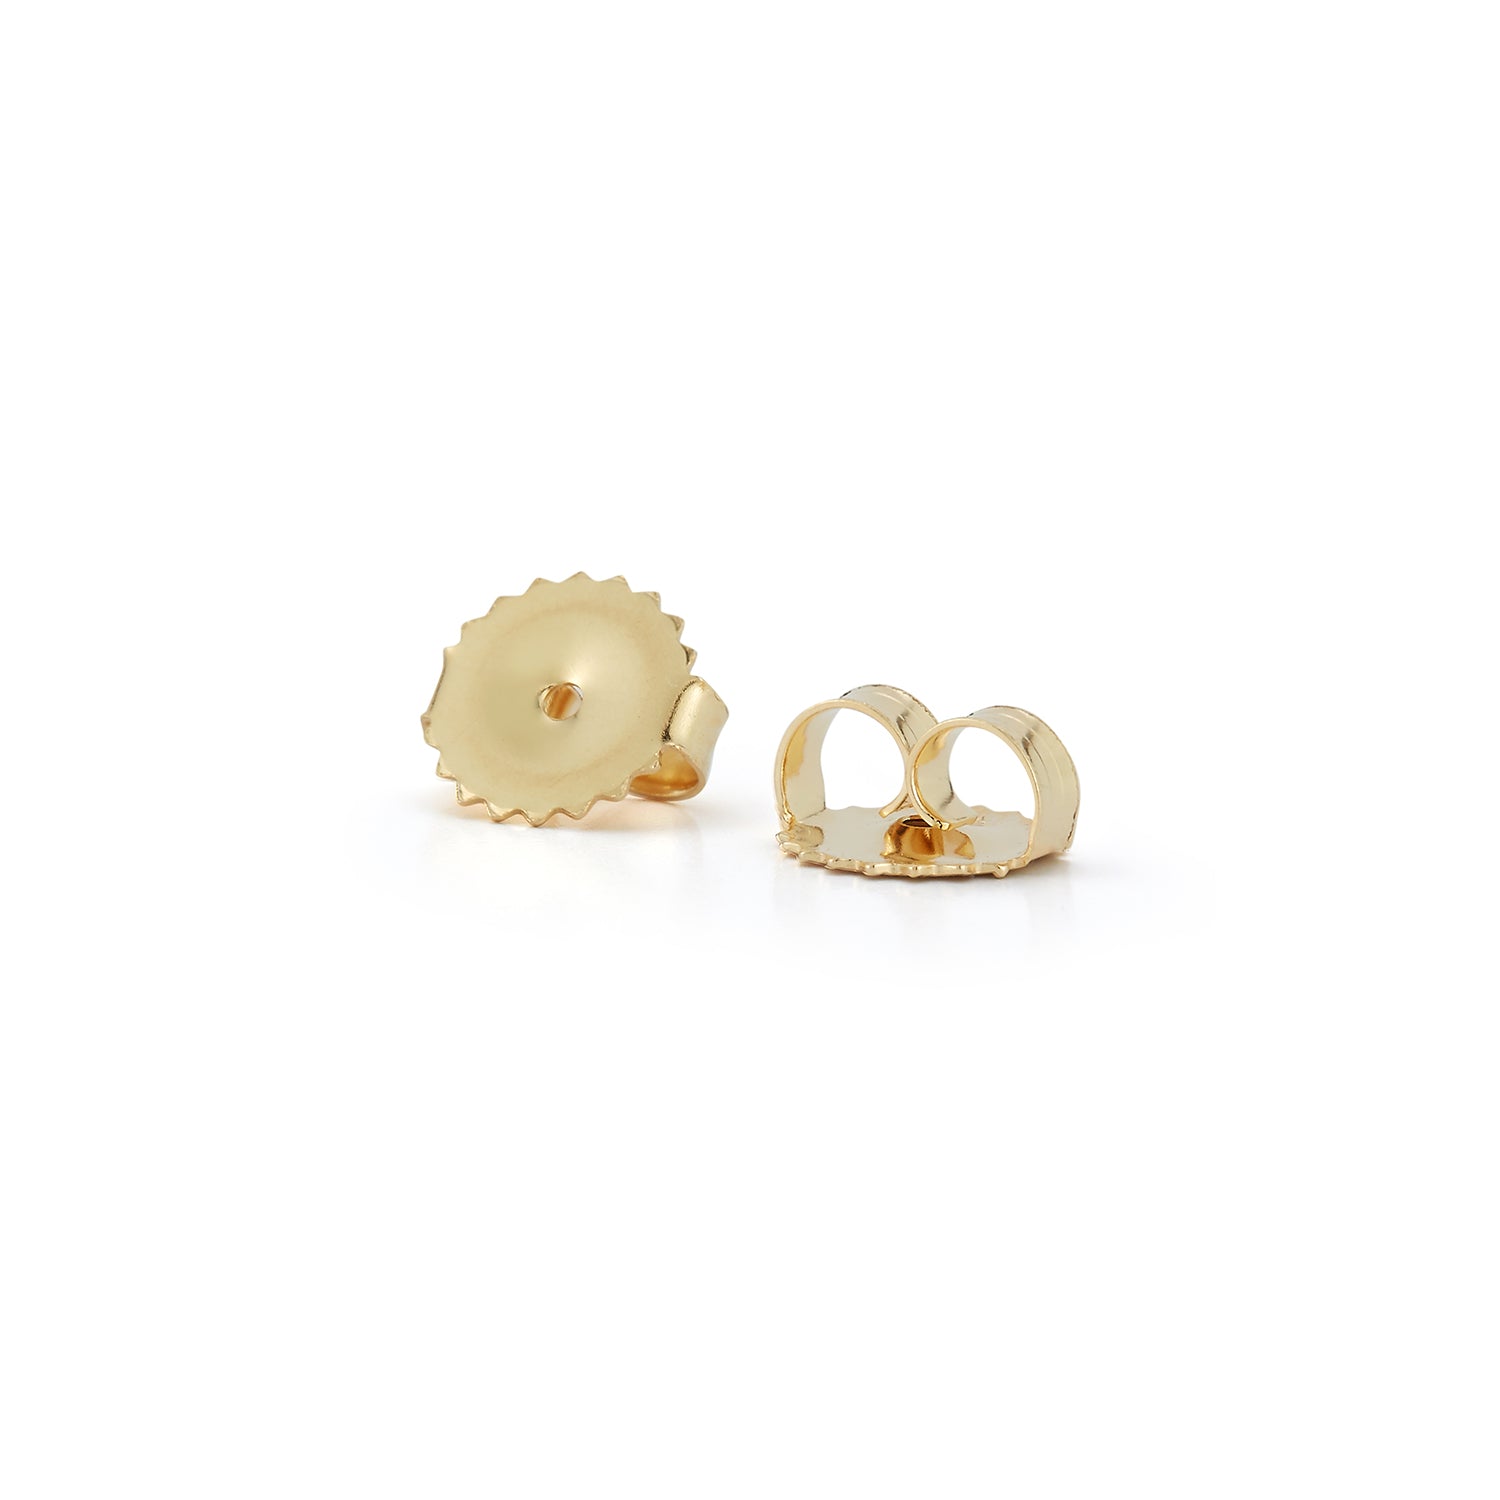 Earring Posts & Backs Conversions - My Jewelry Repair